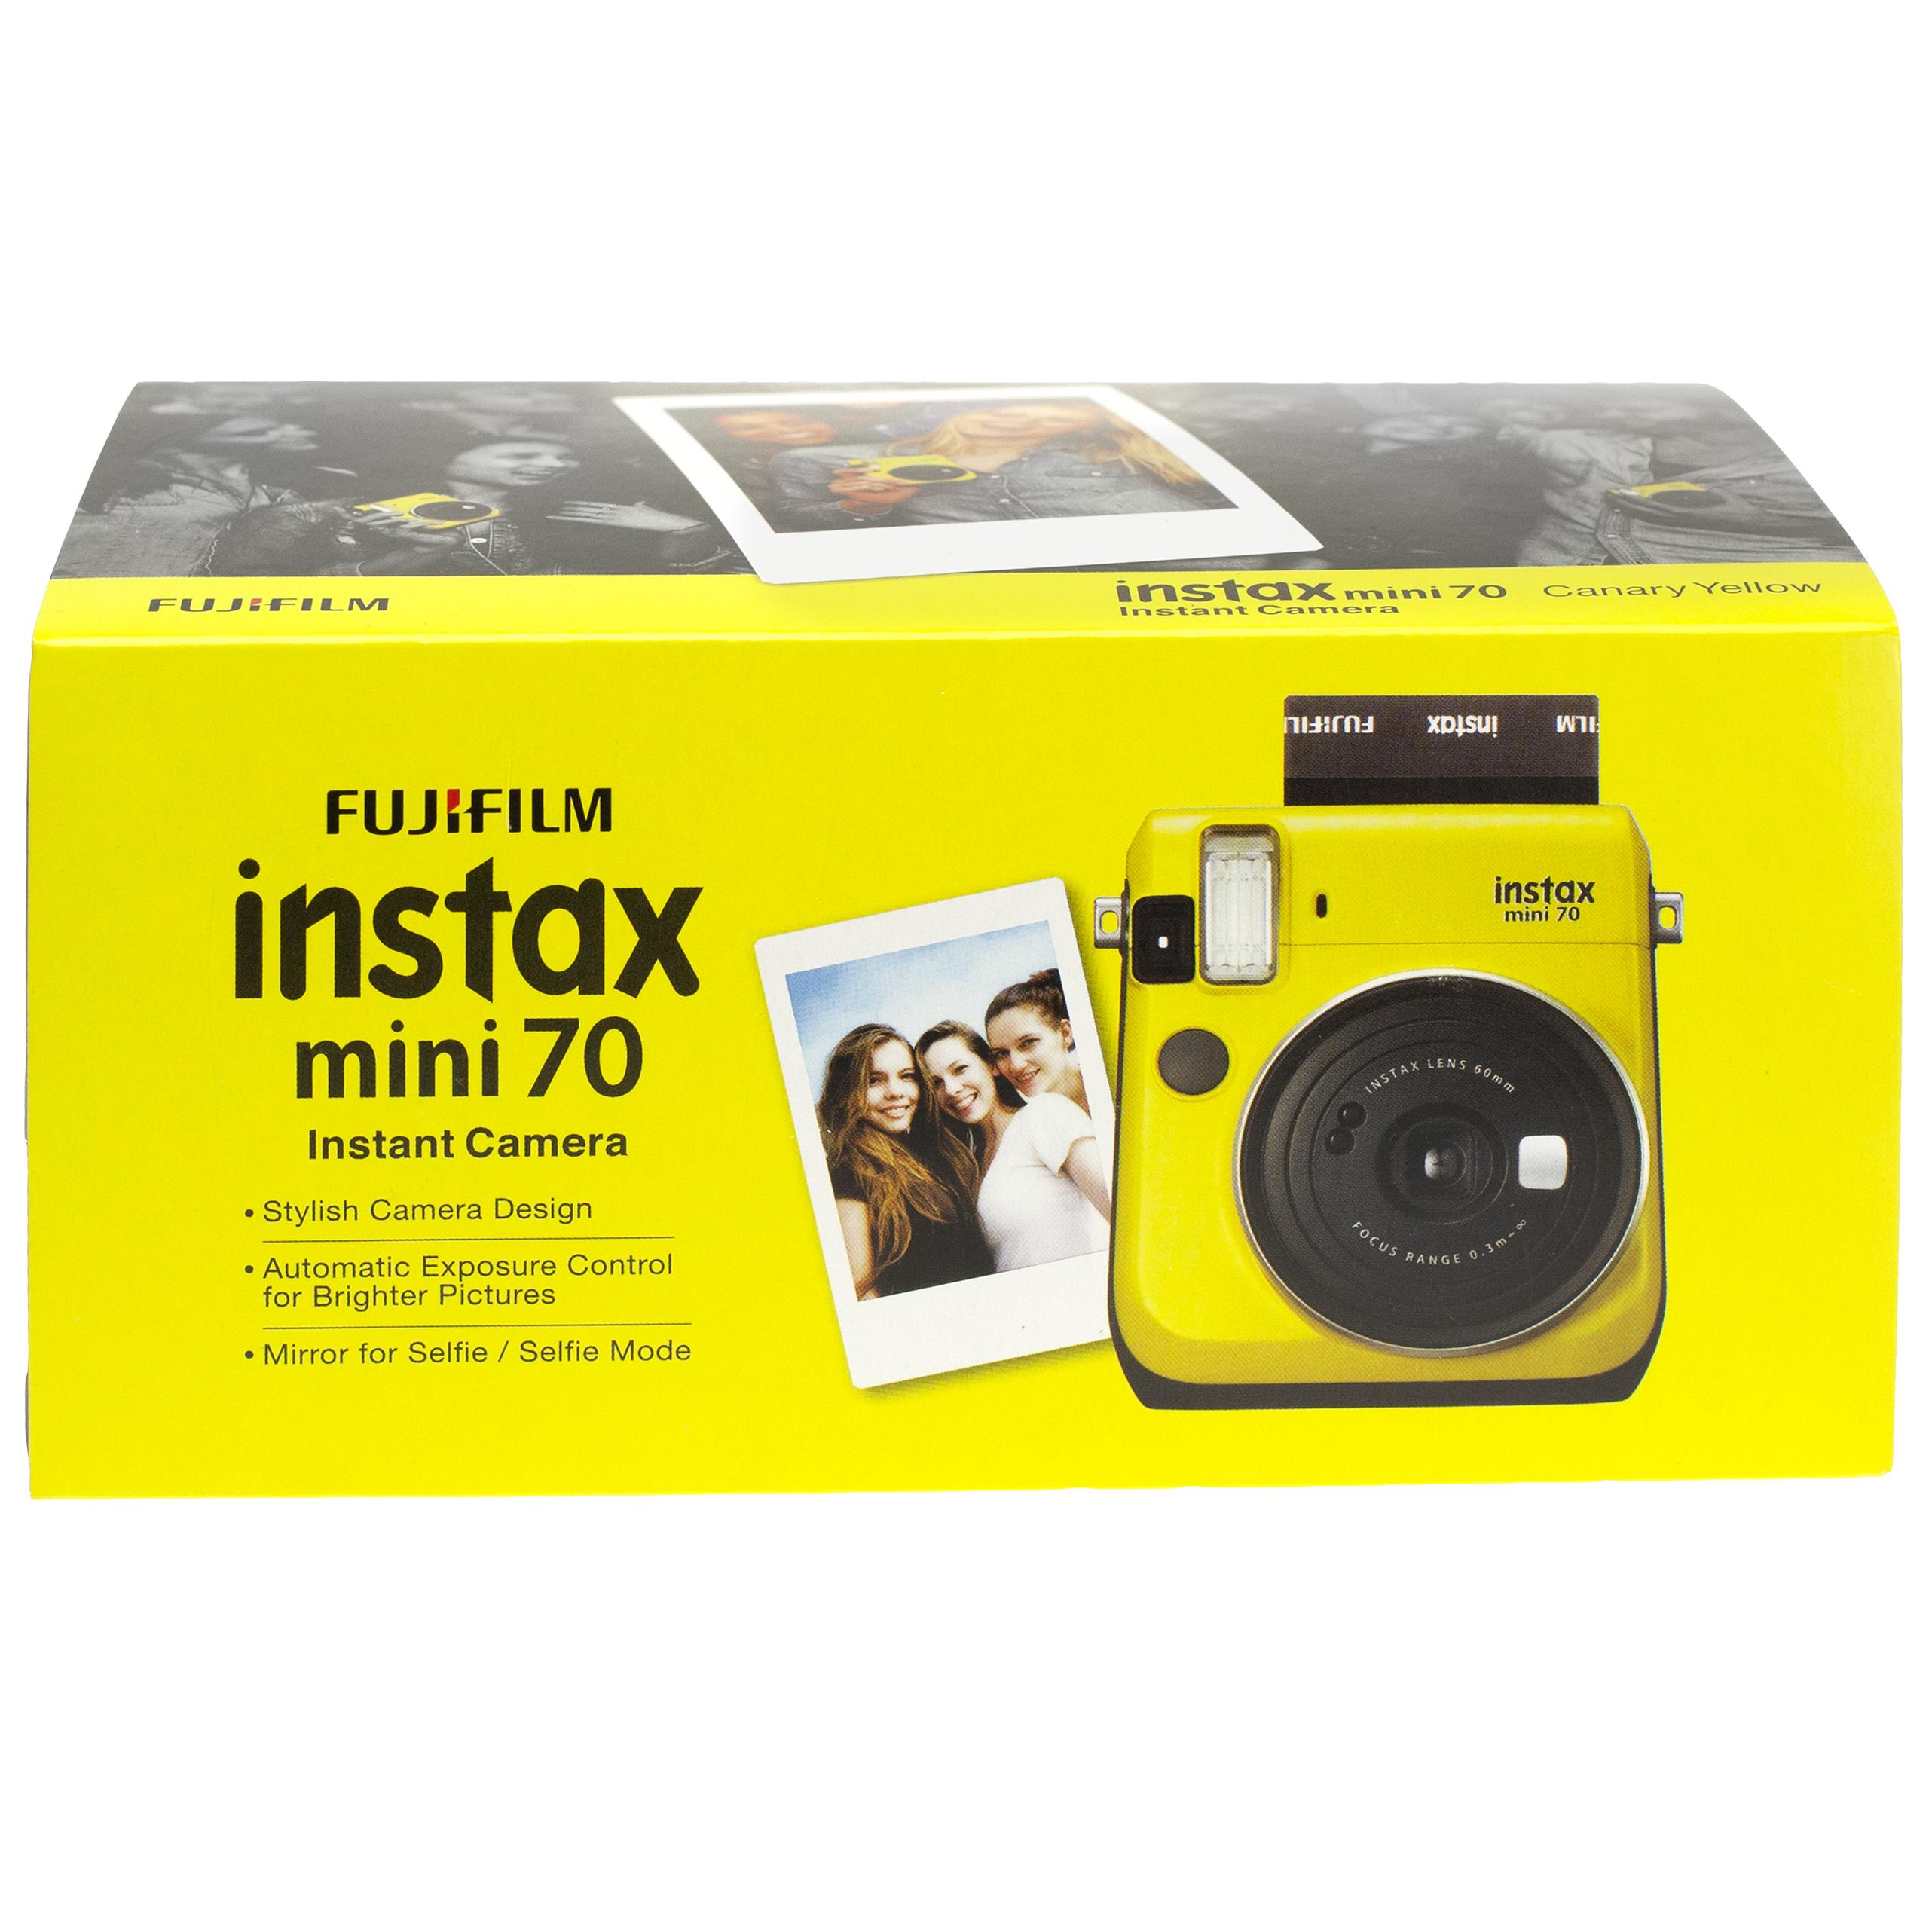 Máy chụp ảnh lấy liền-Fujifilm Instax mini 70+ tặng 1 hộp film mini 20 tấm